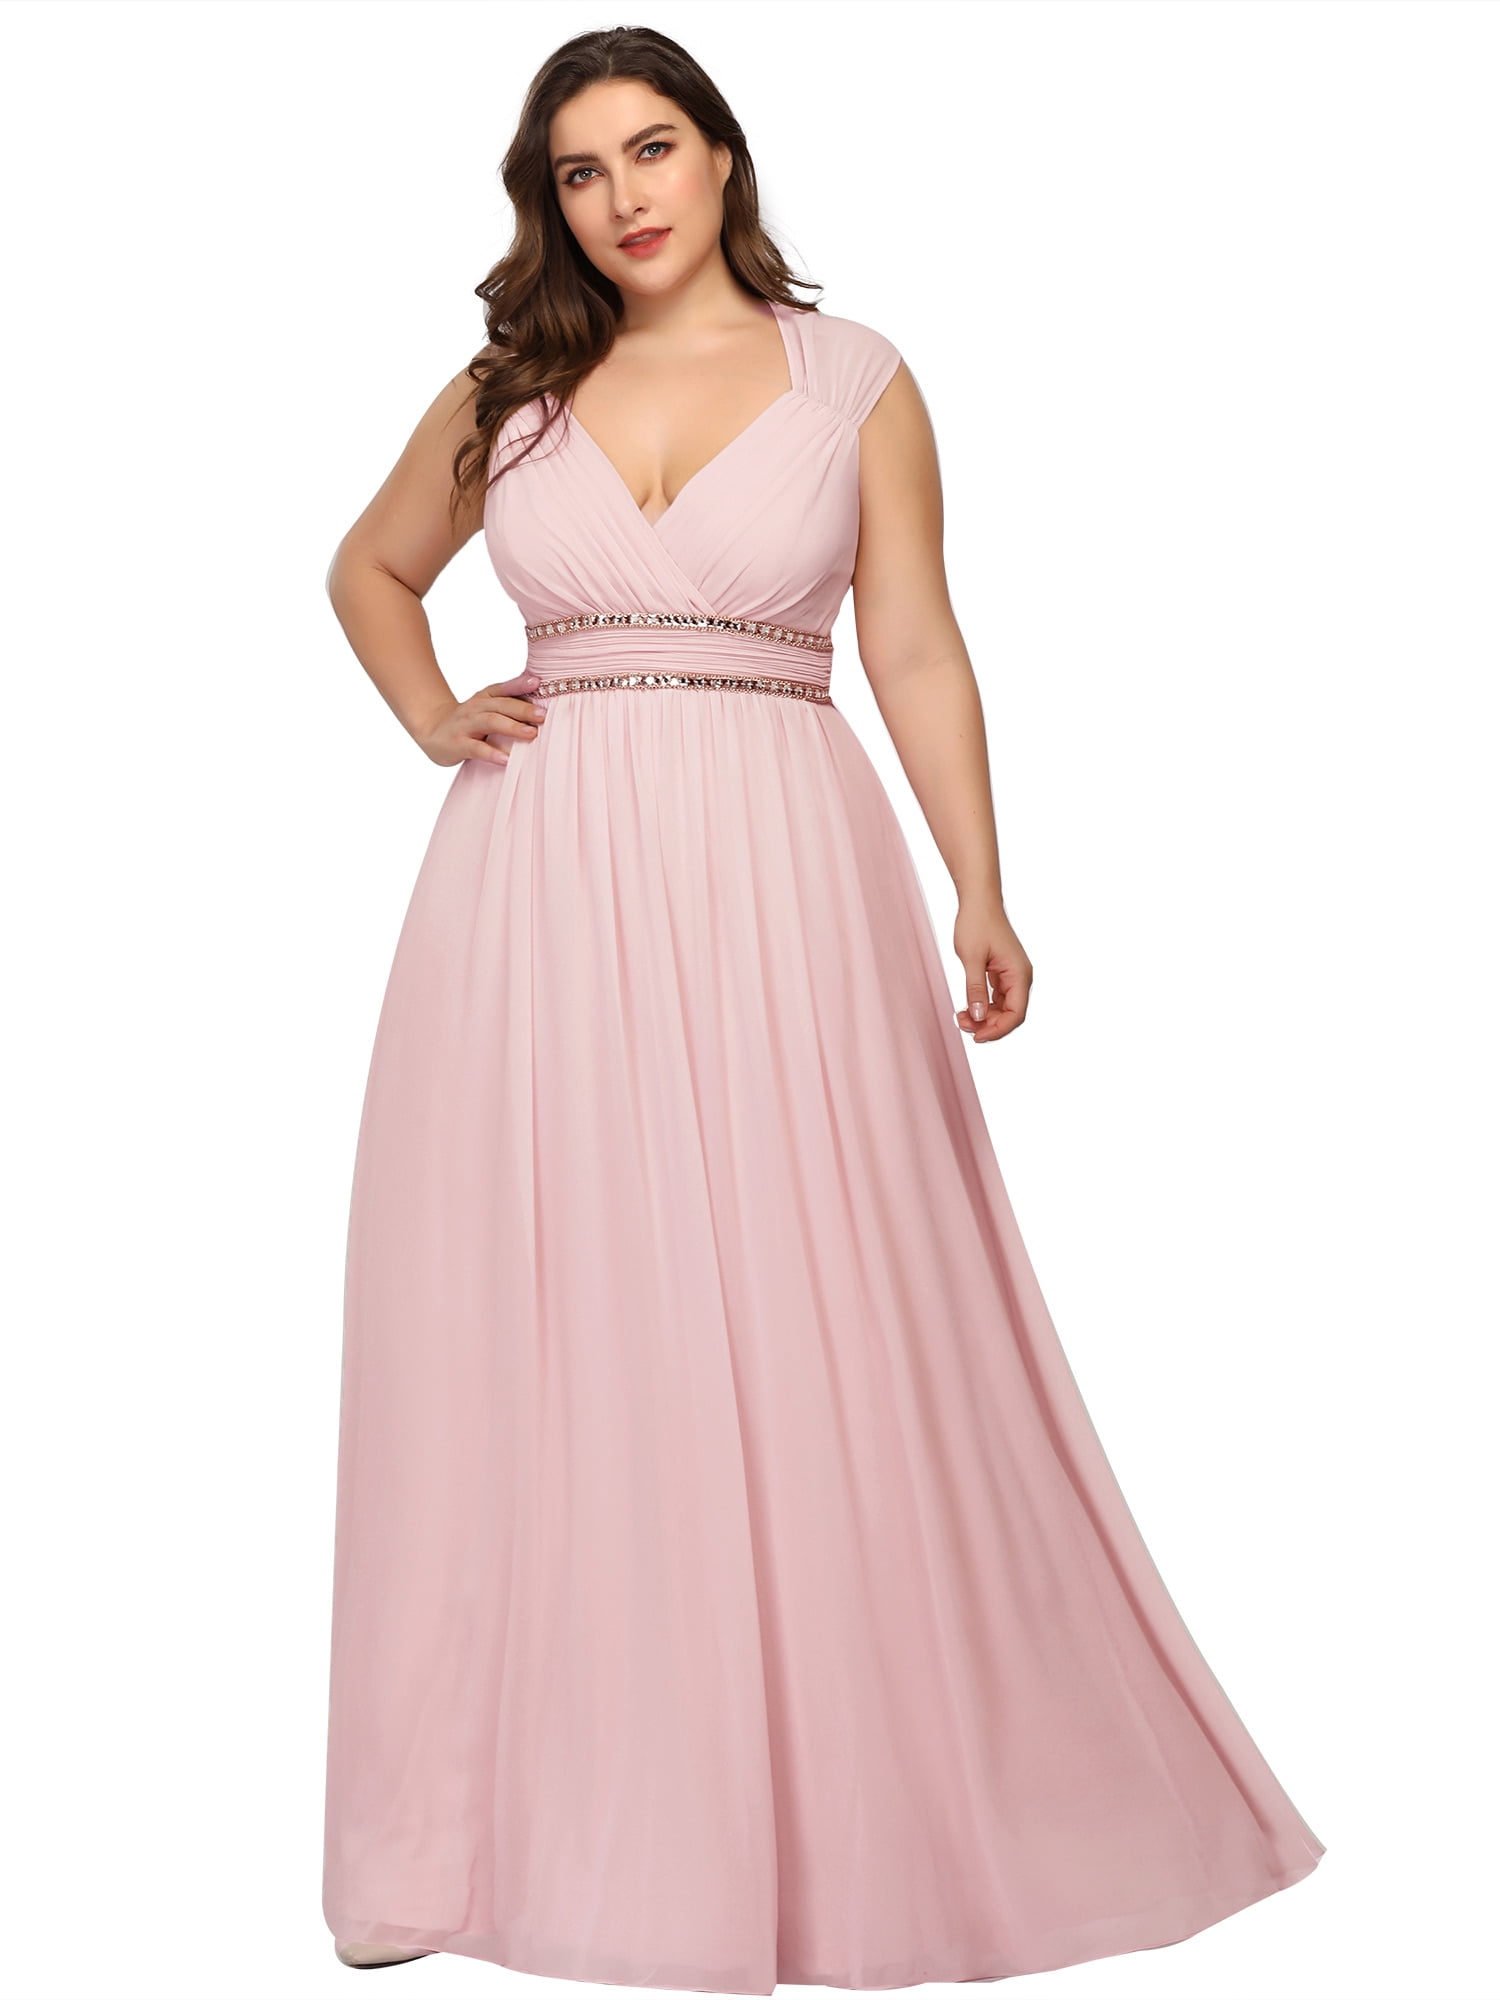 Plus Size 24W Women Sleeveless V-Back Chiffon Ball Gown Evening Prom Party Dress 